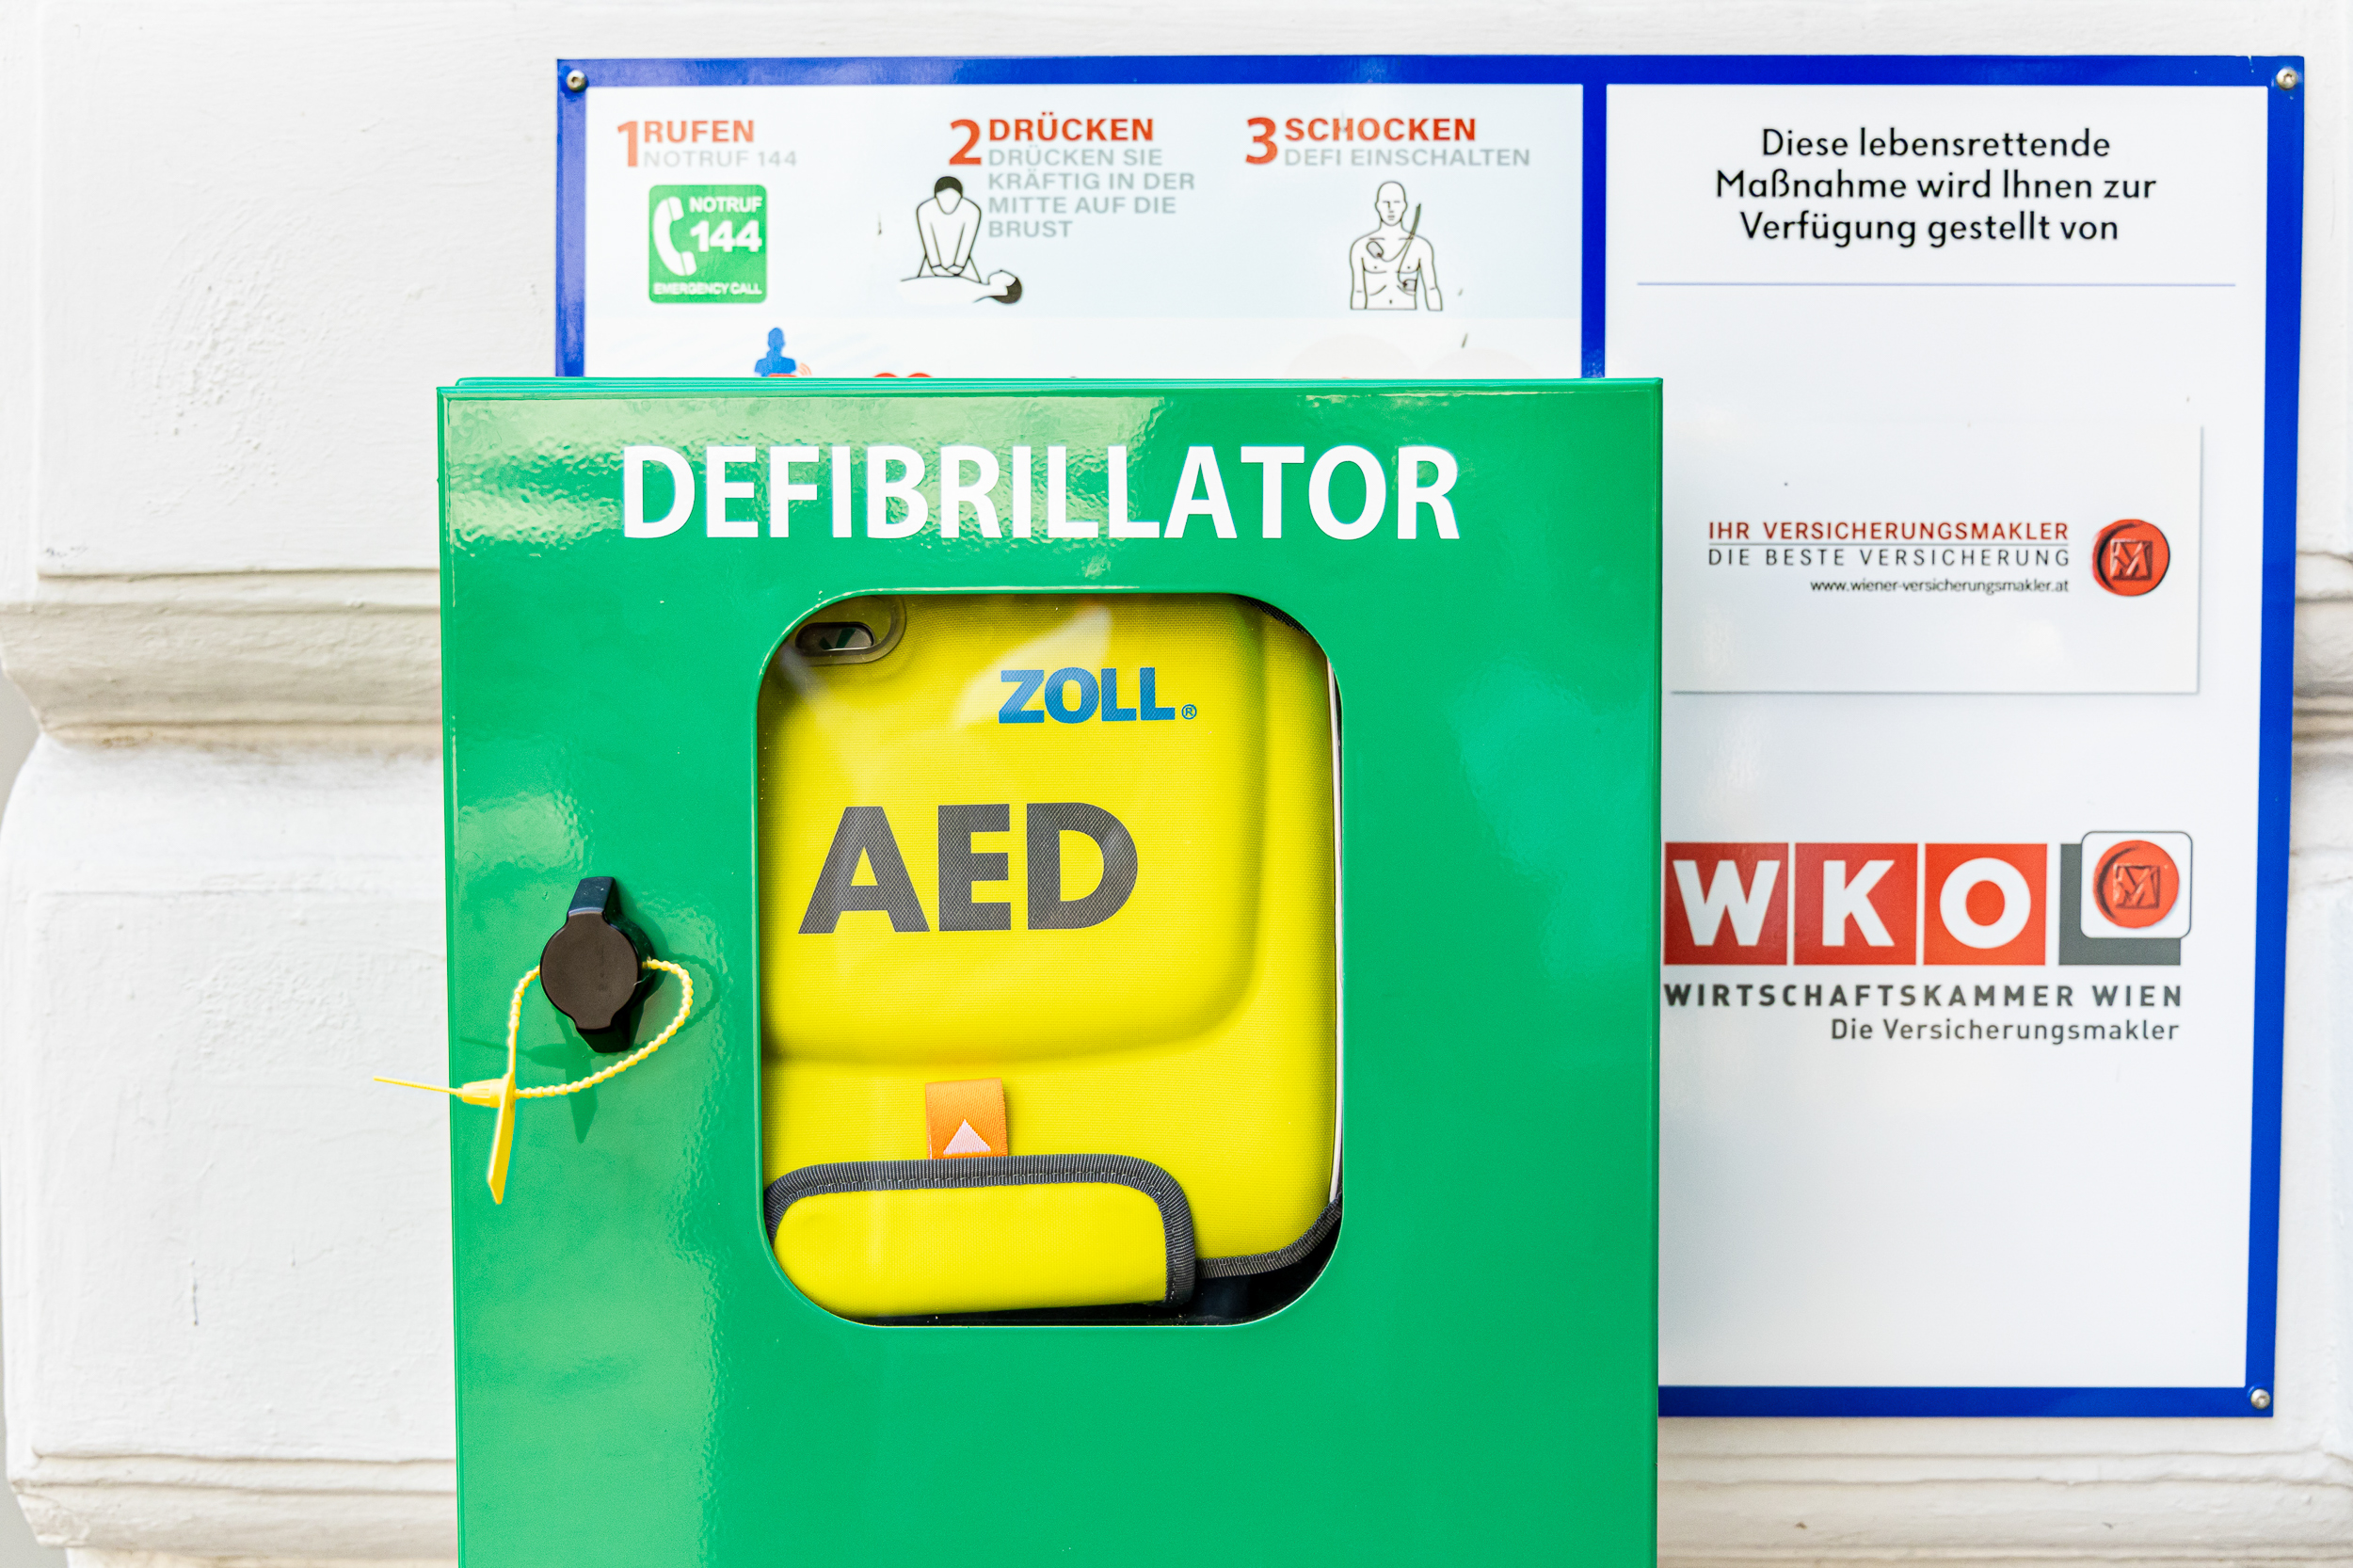 defibrillator